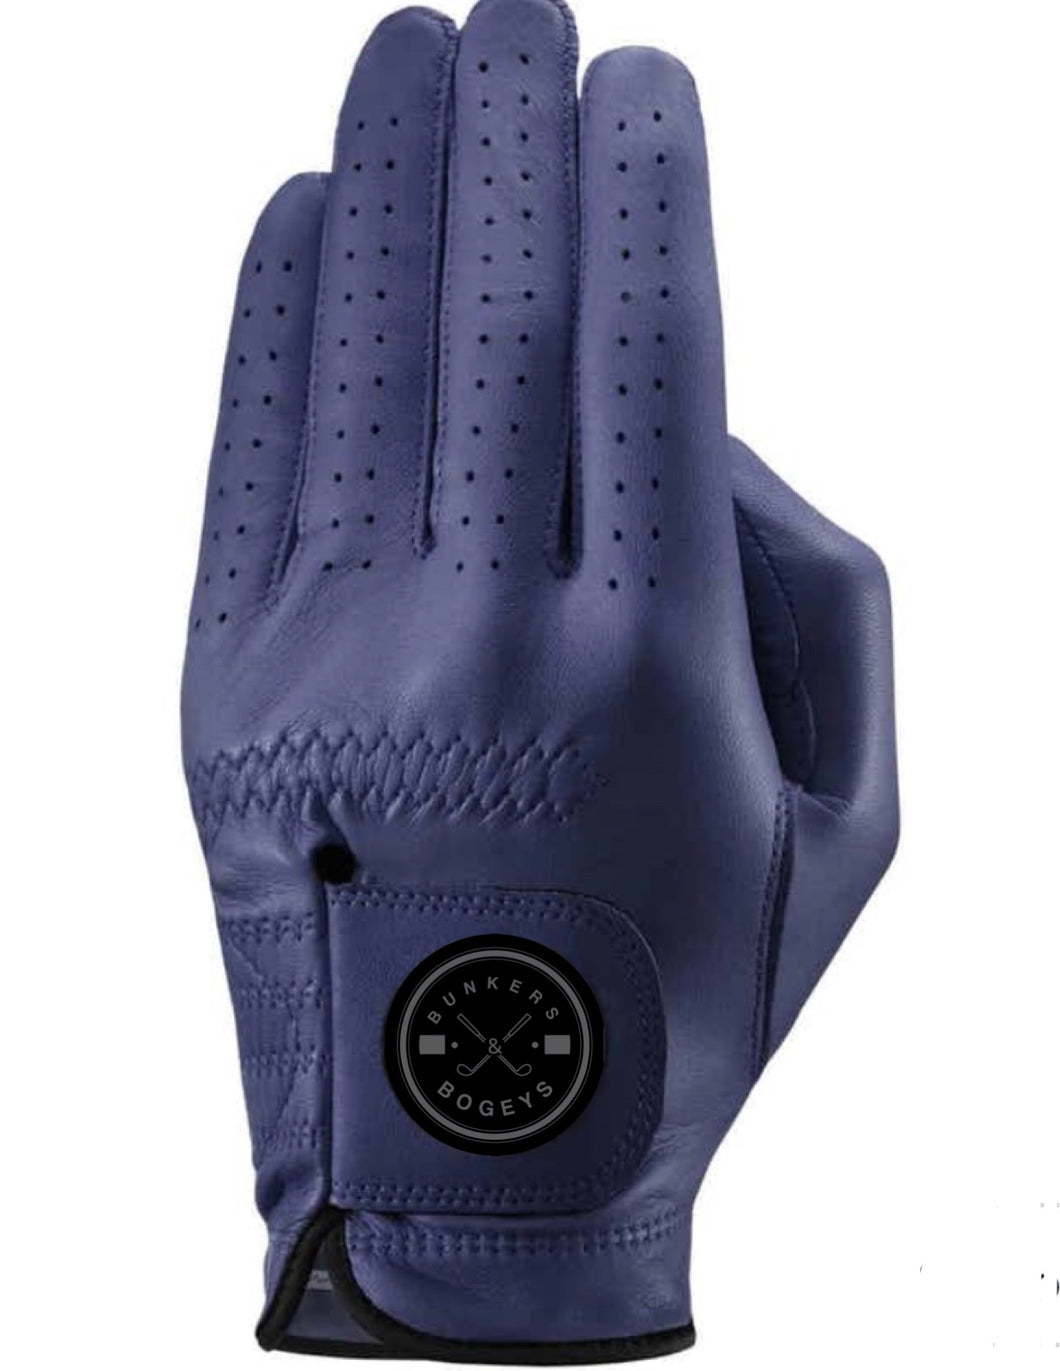 The Starter Glove